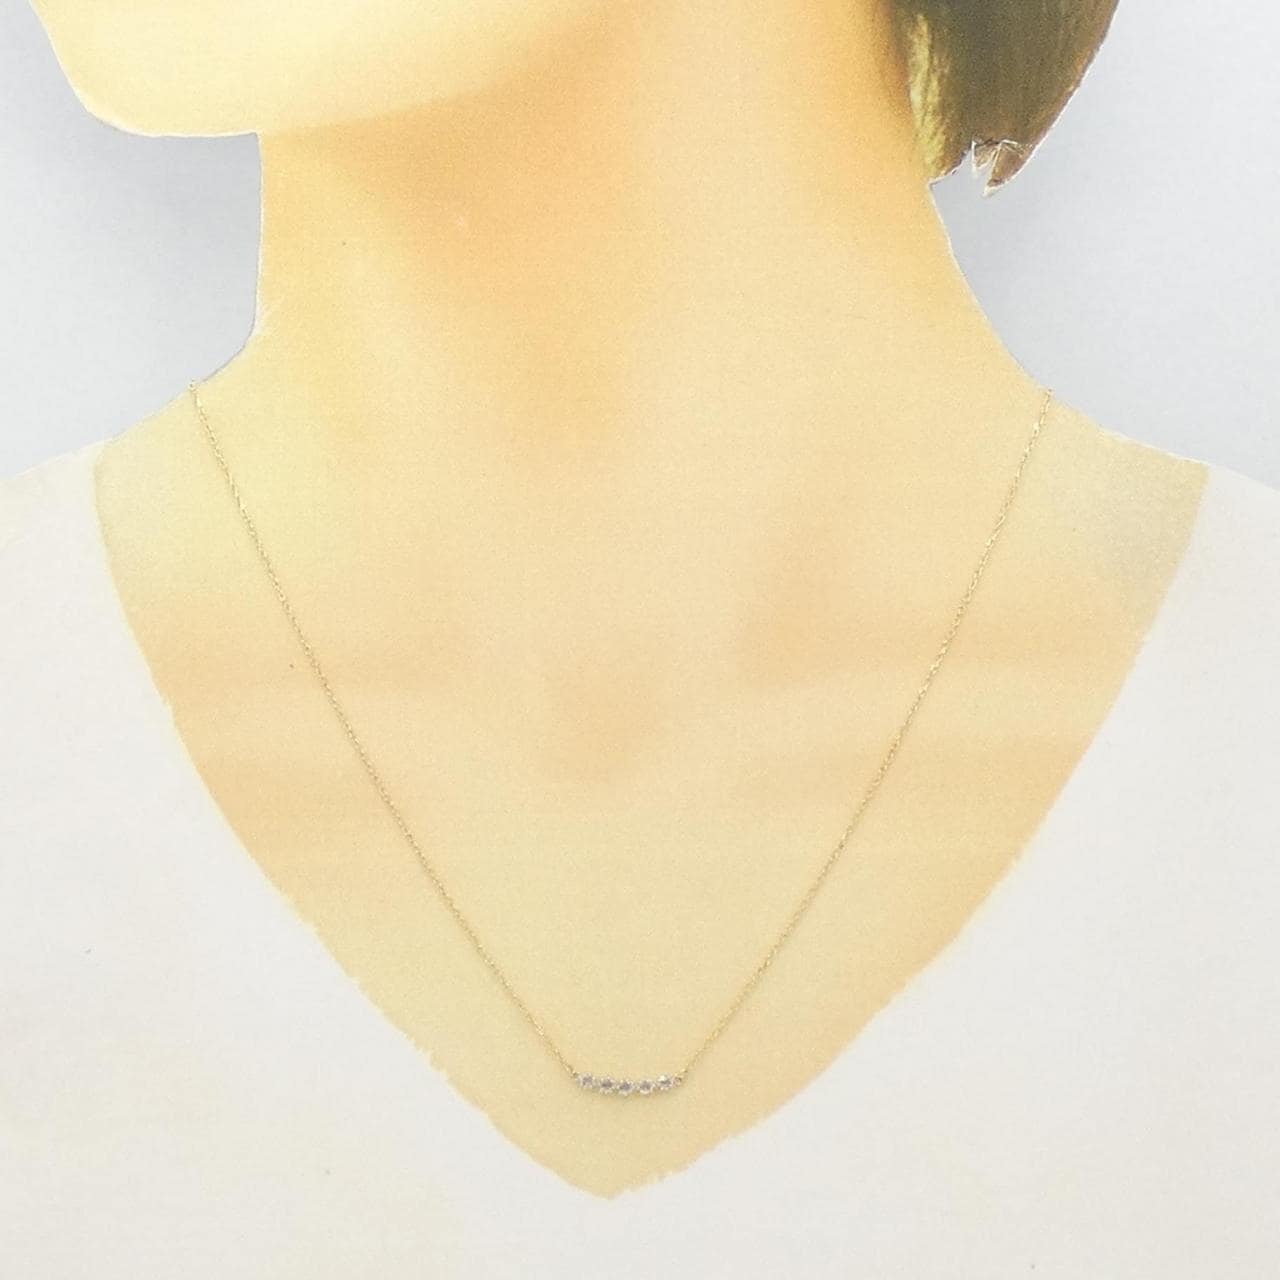 K18WG/K18YG Diamond necklace 0.09CT